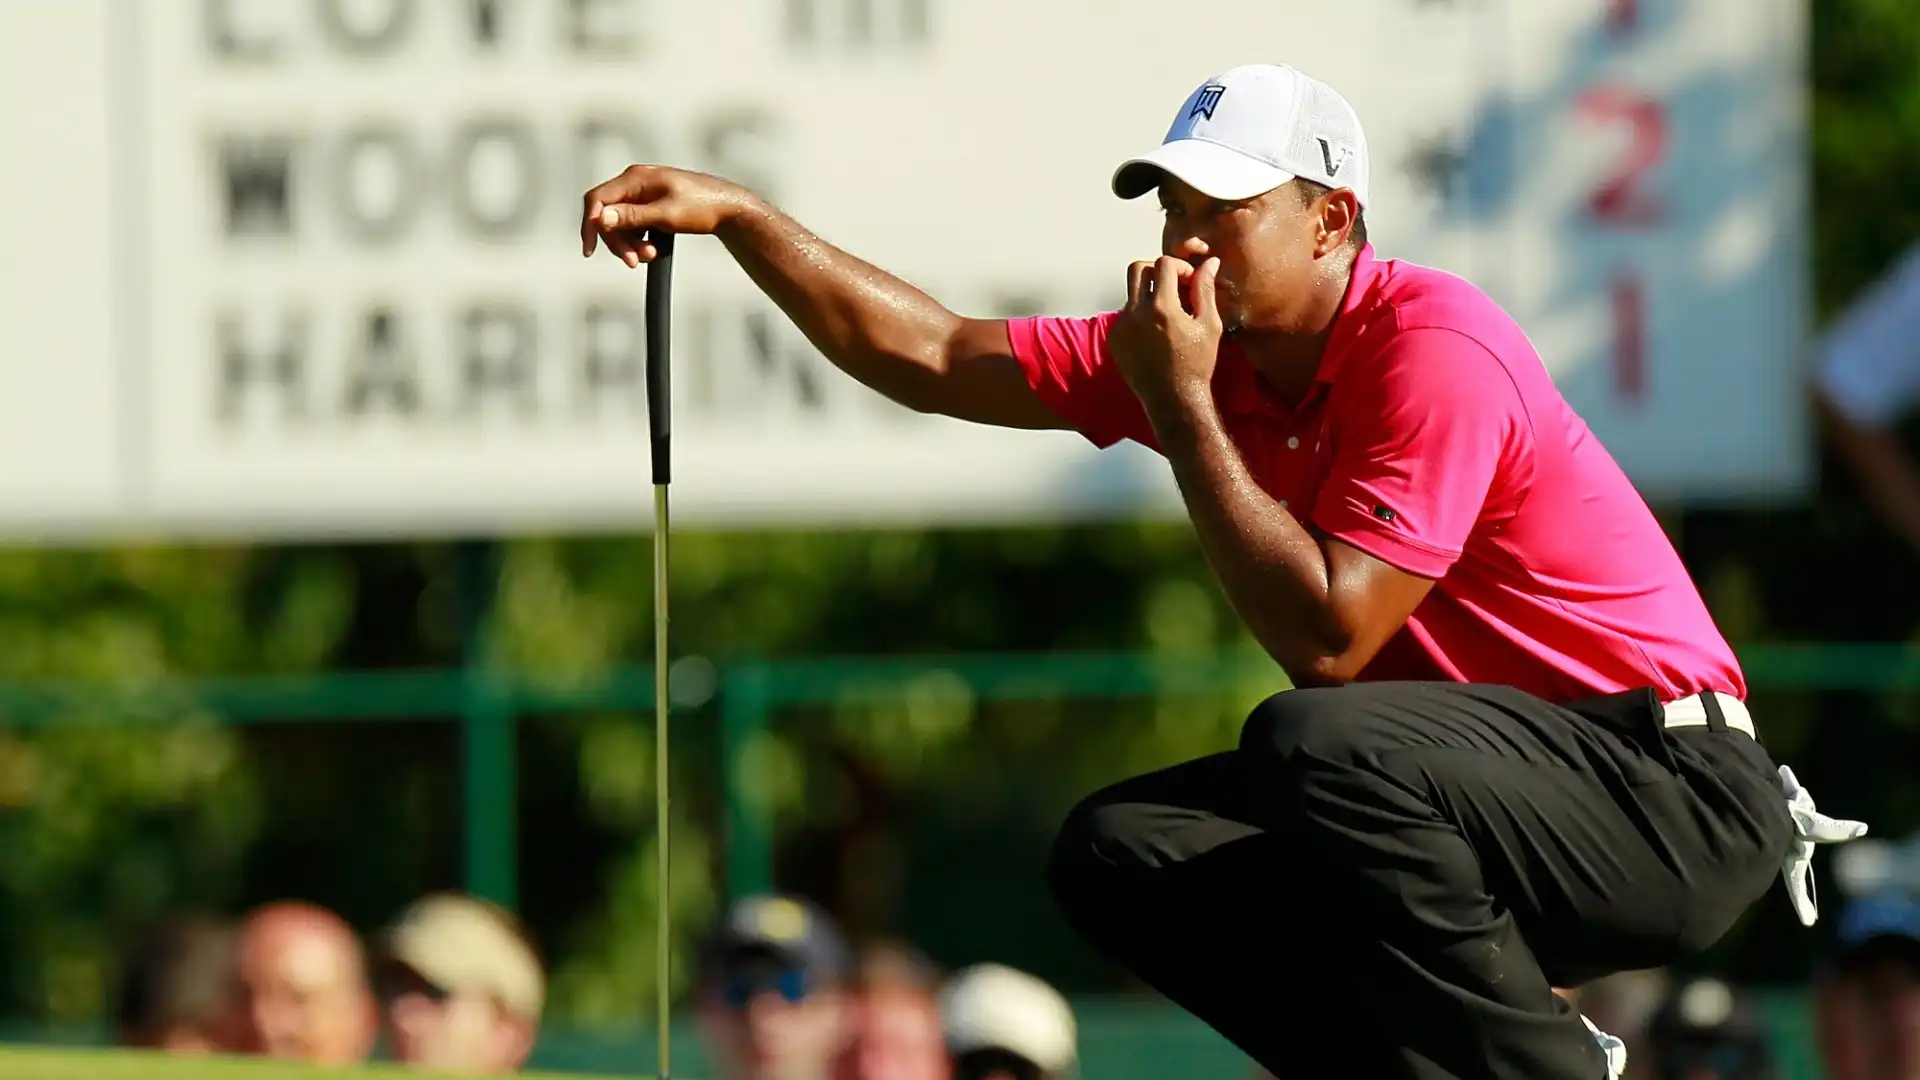 2011: Tiger Woods (Golf), guadagni totali stimati 75 milioni di dollari